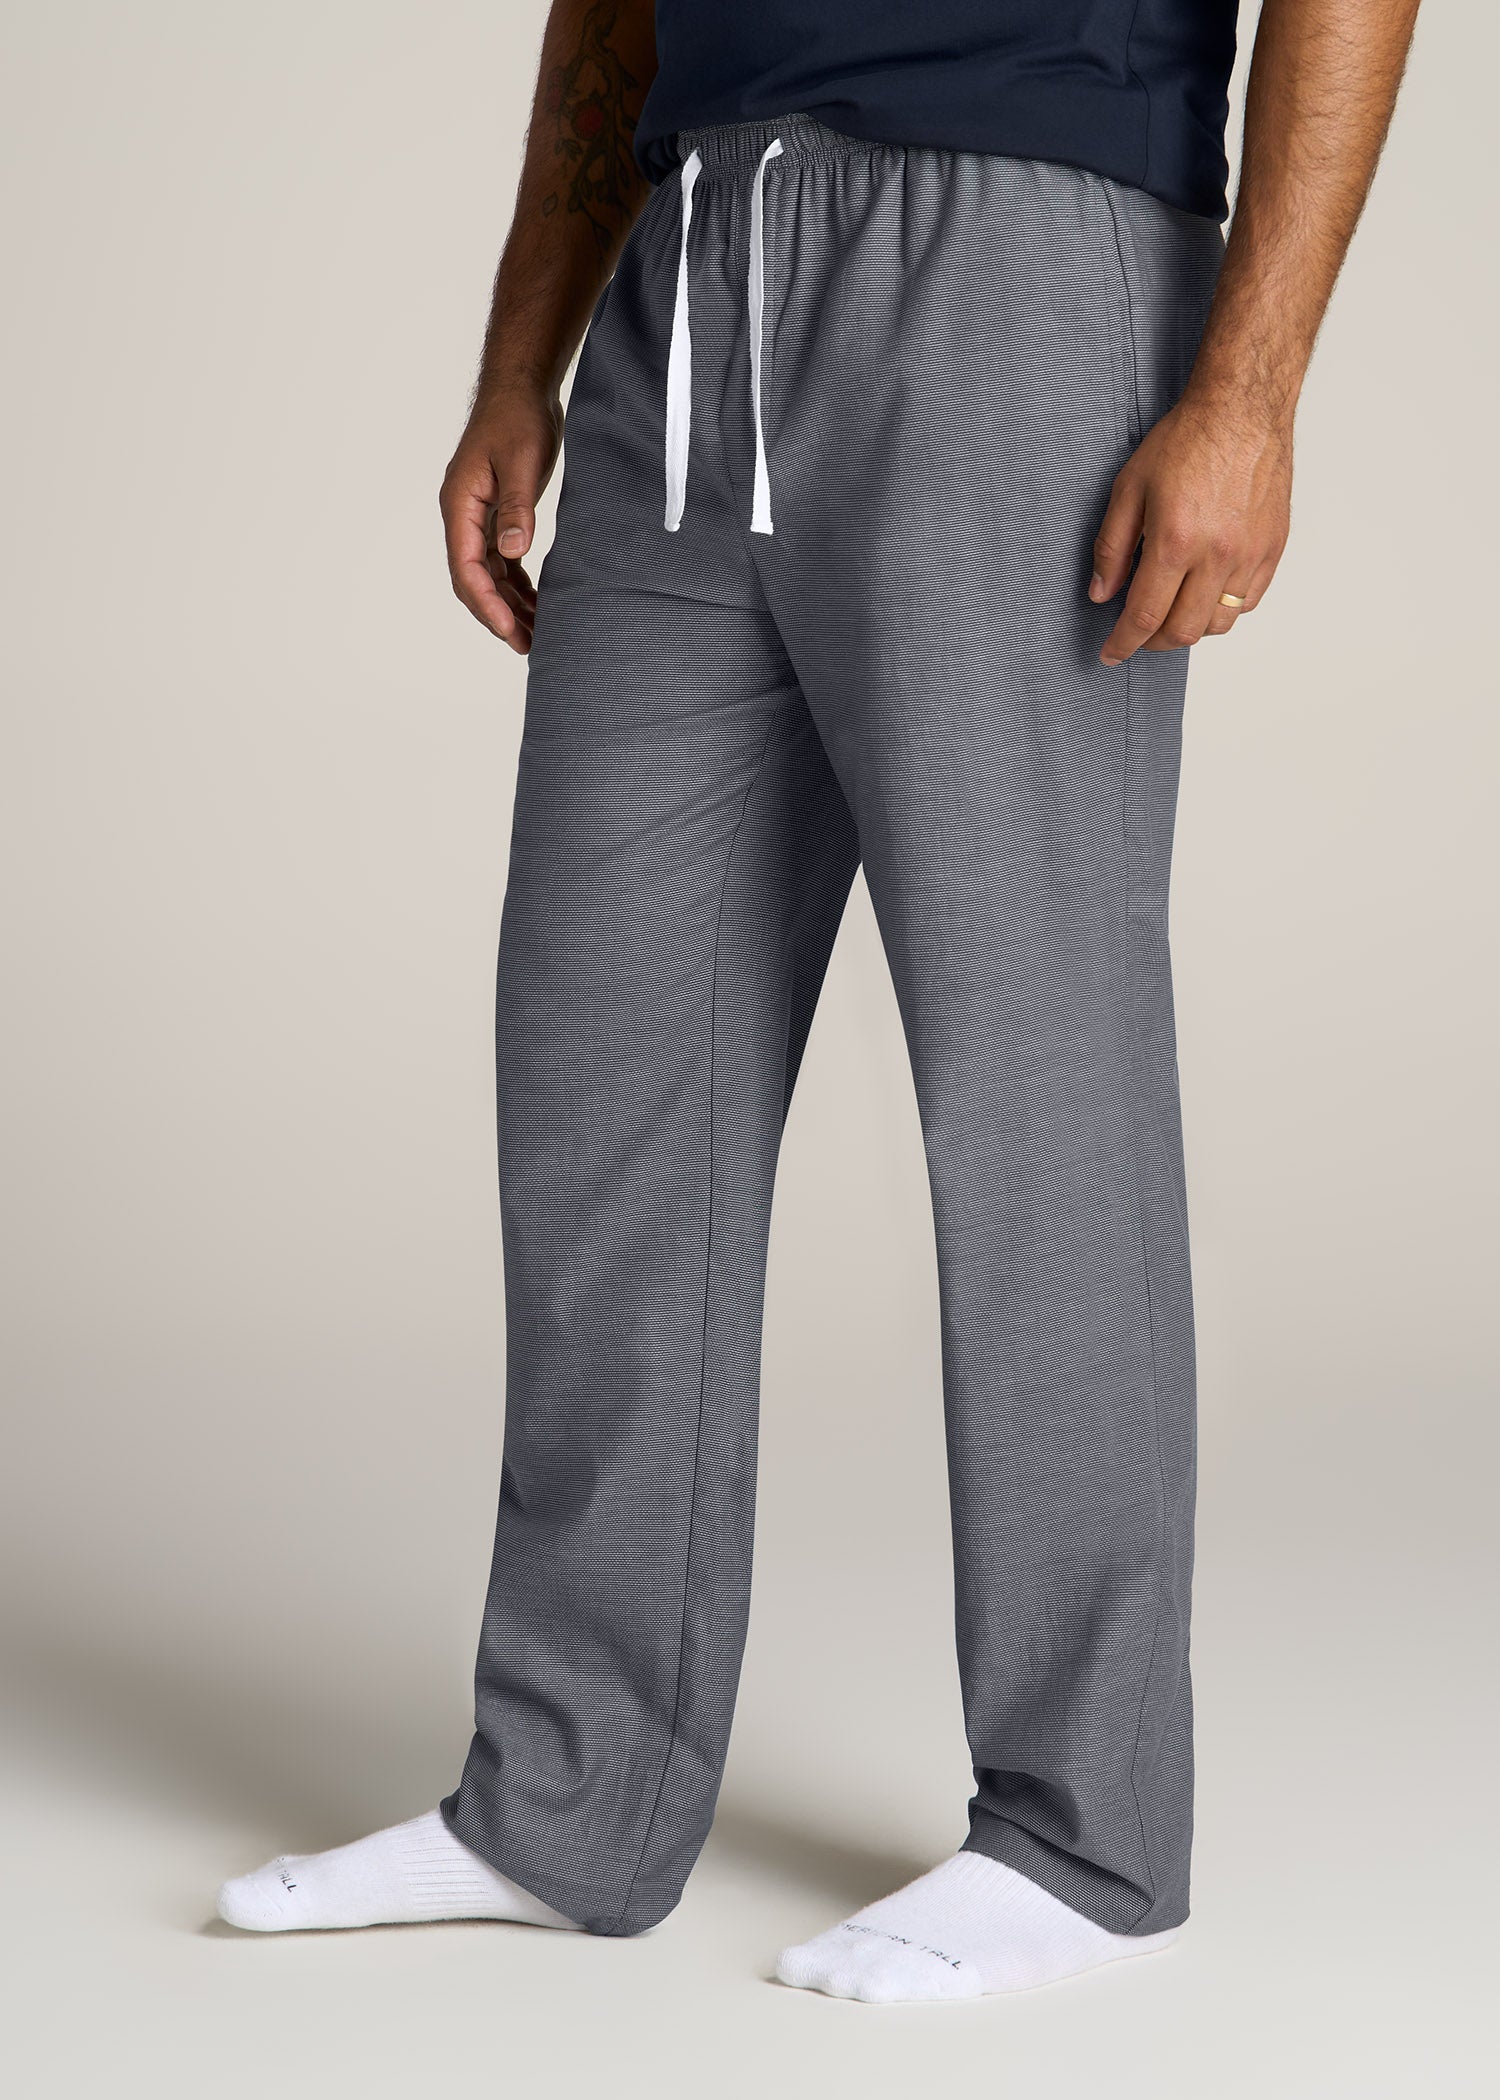 Essentials Men's Straight-Fit Woven Pajama Pant, Light Blue